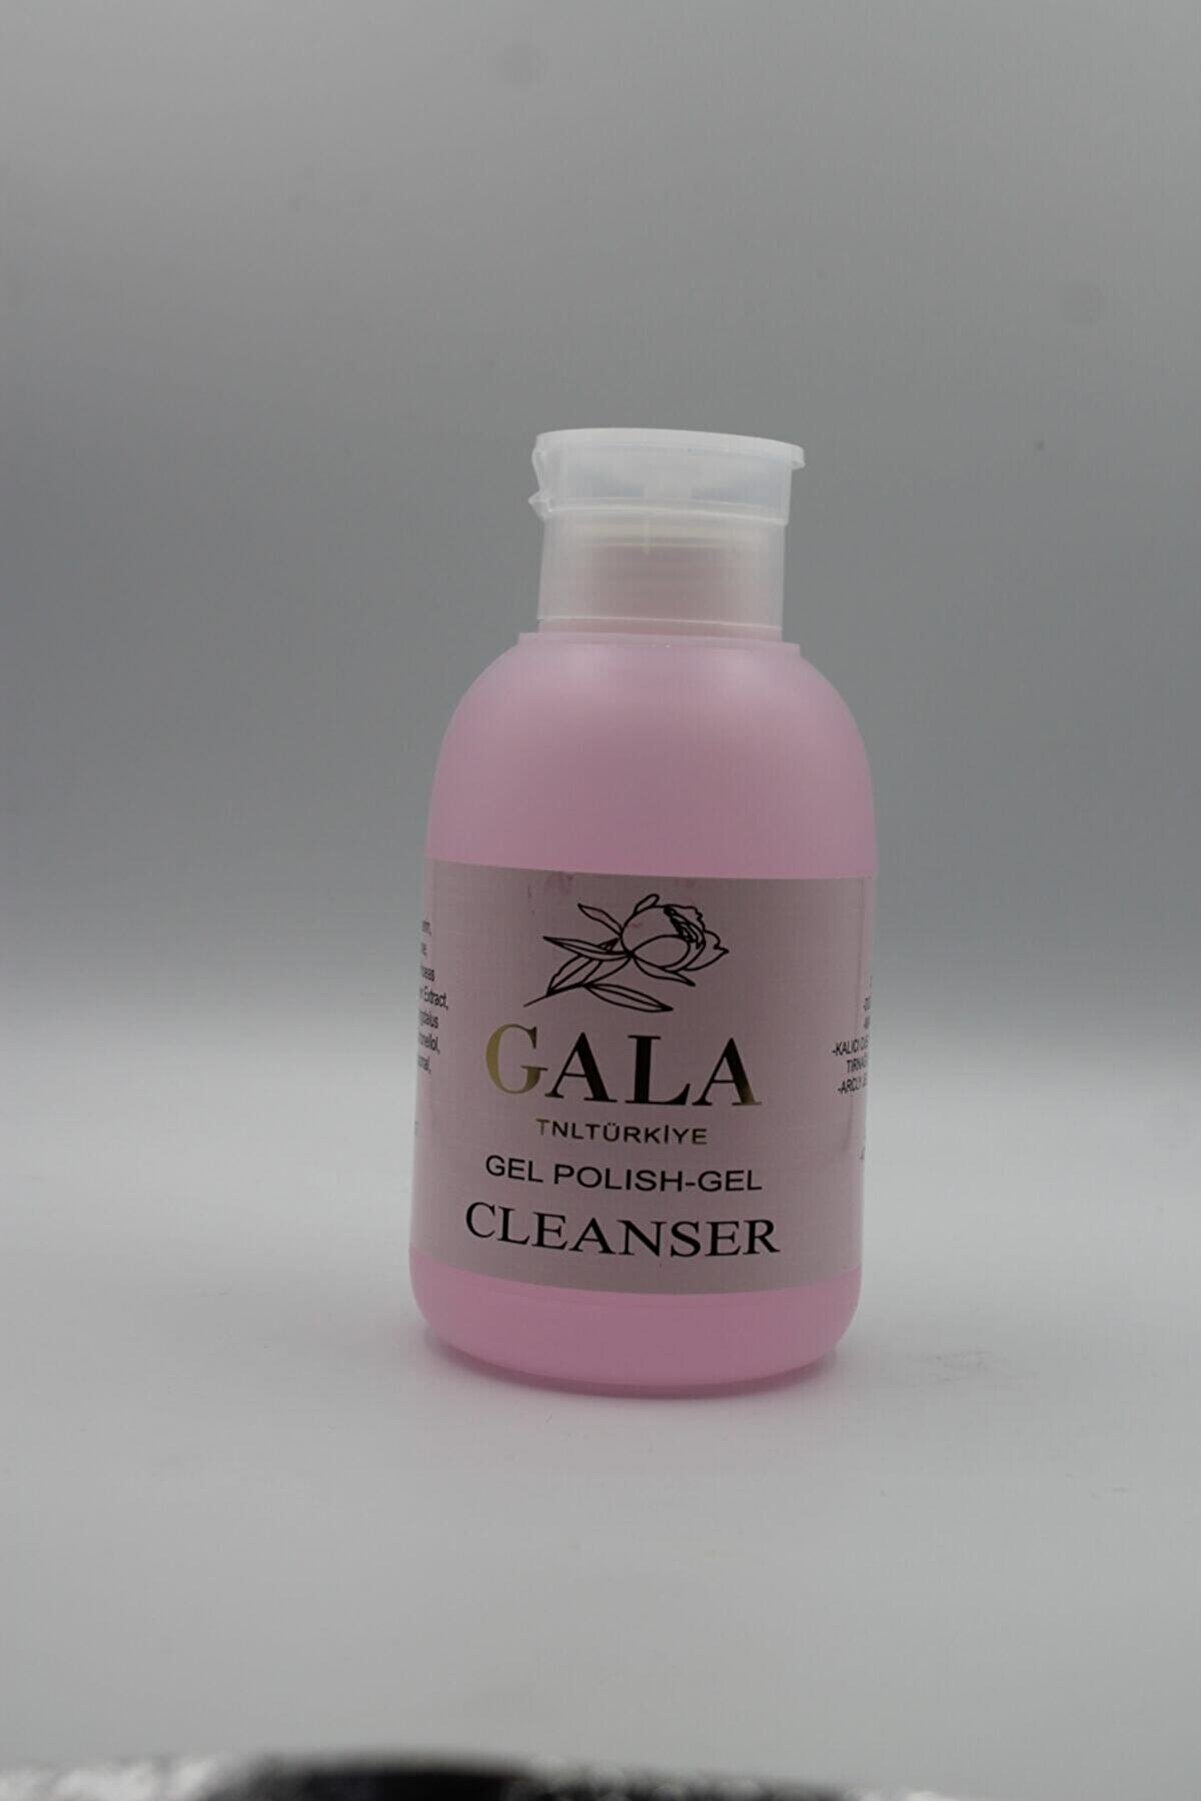 TNL Gala Cleanser